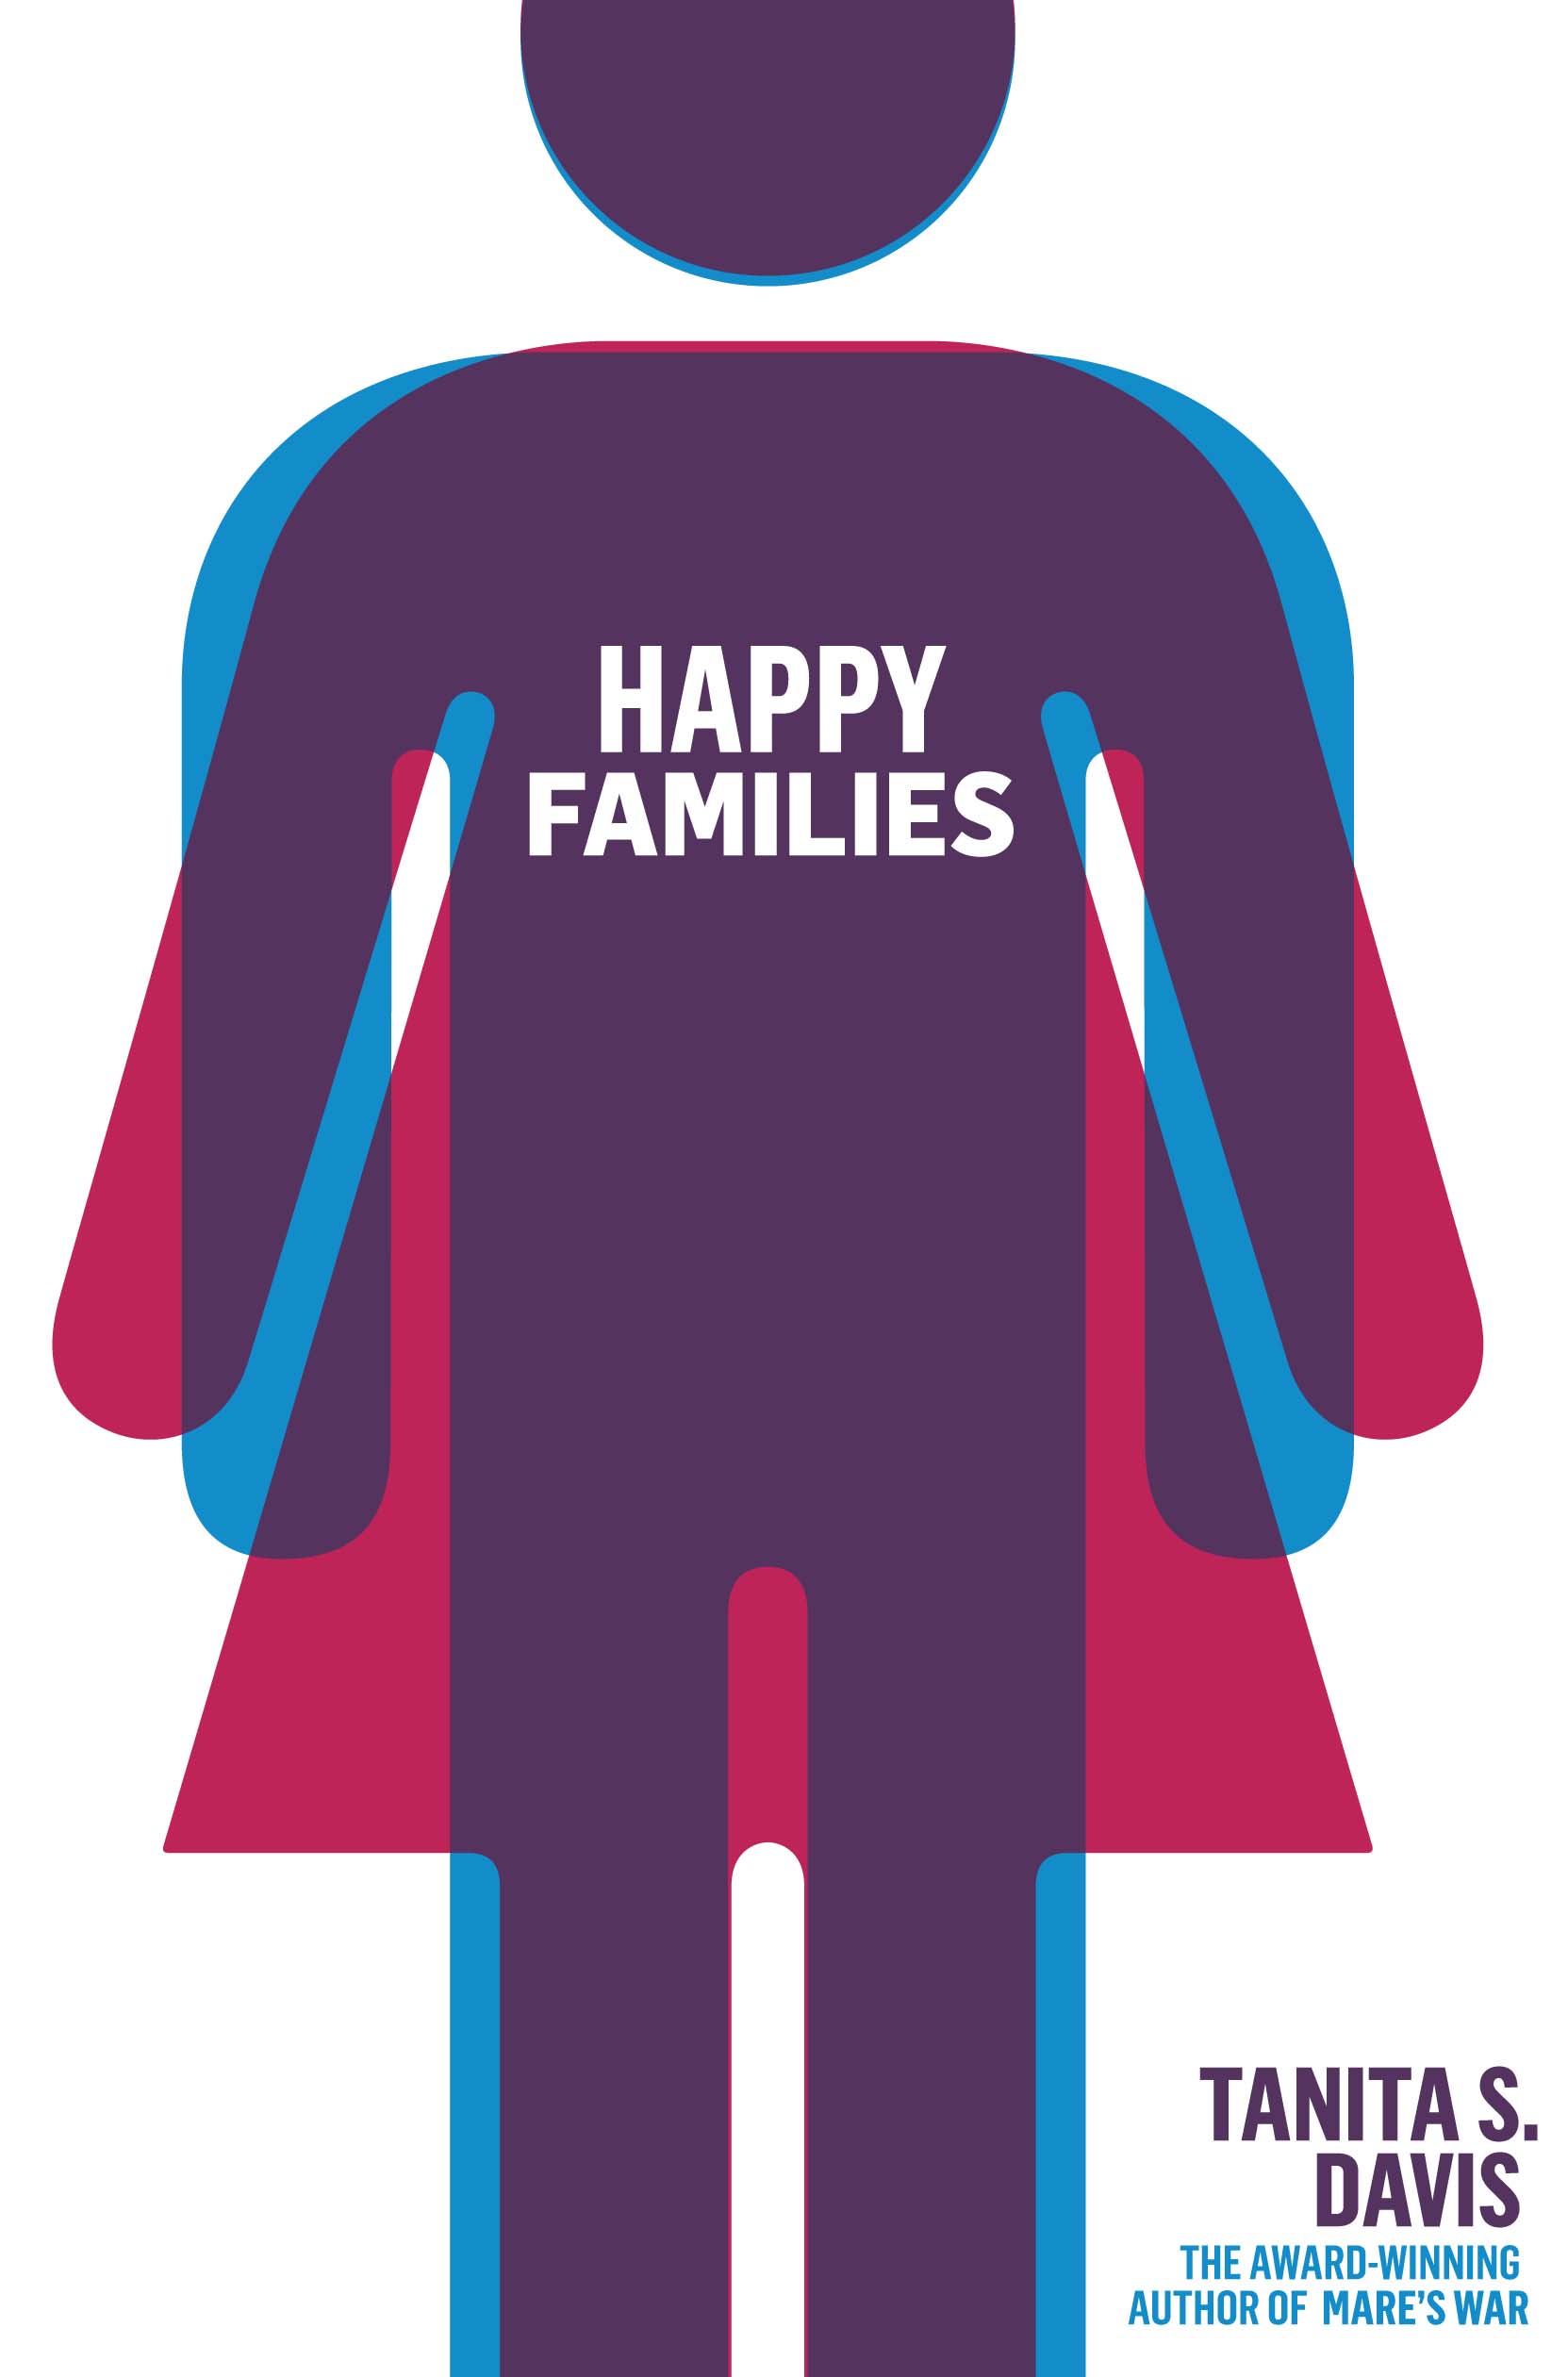 Happy Families by Tanita S. Davis